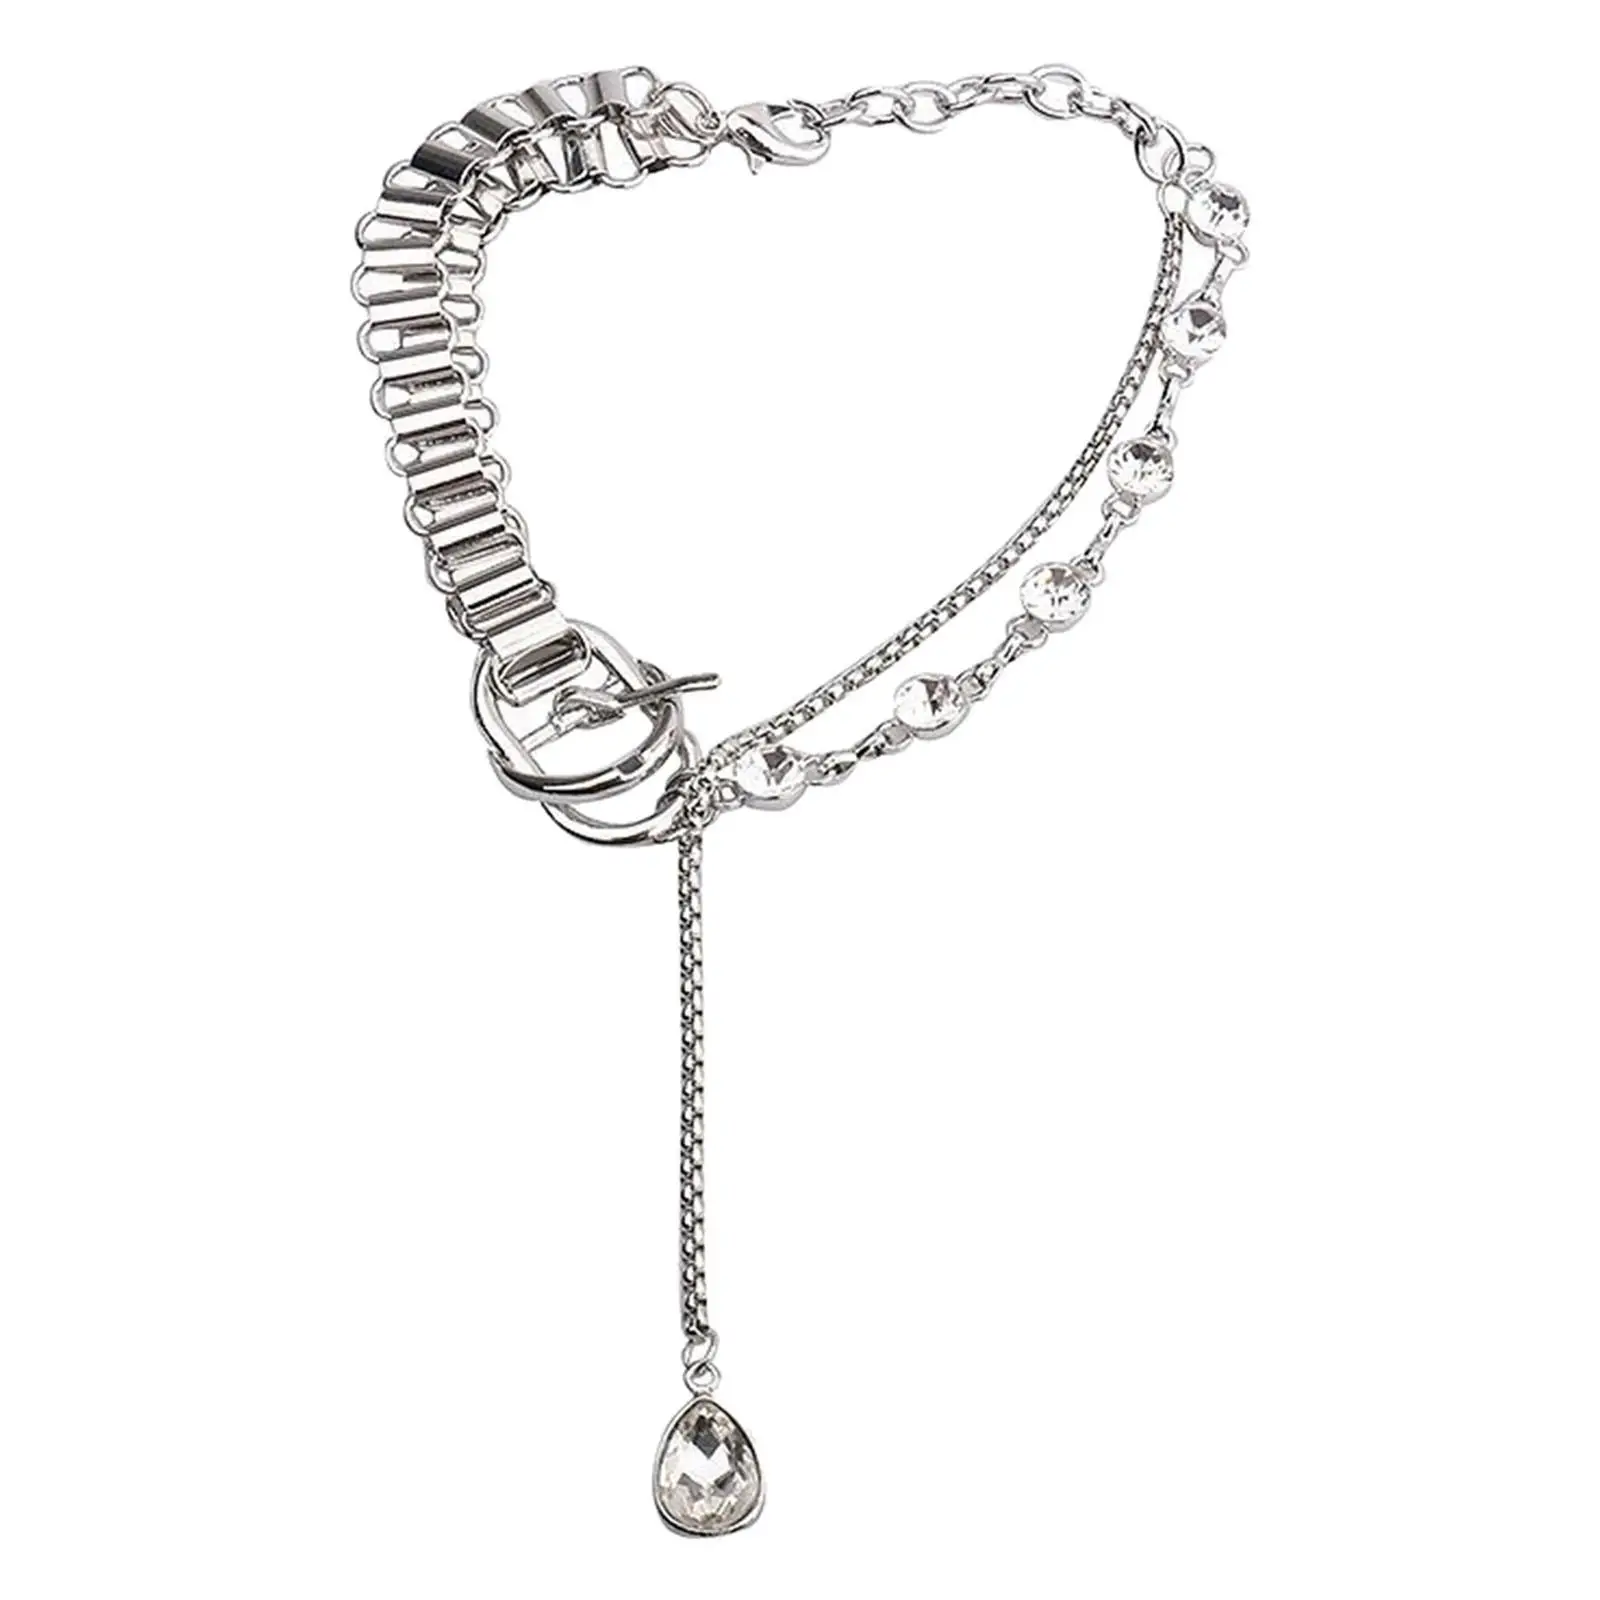 Elegant Geometric Crystal Choker Necklace Glitter Pendant for Girls Girls Wife Daughter Gifts